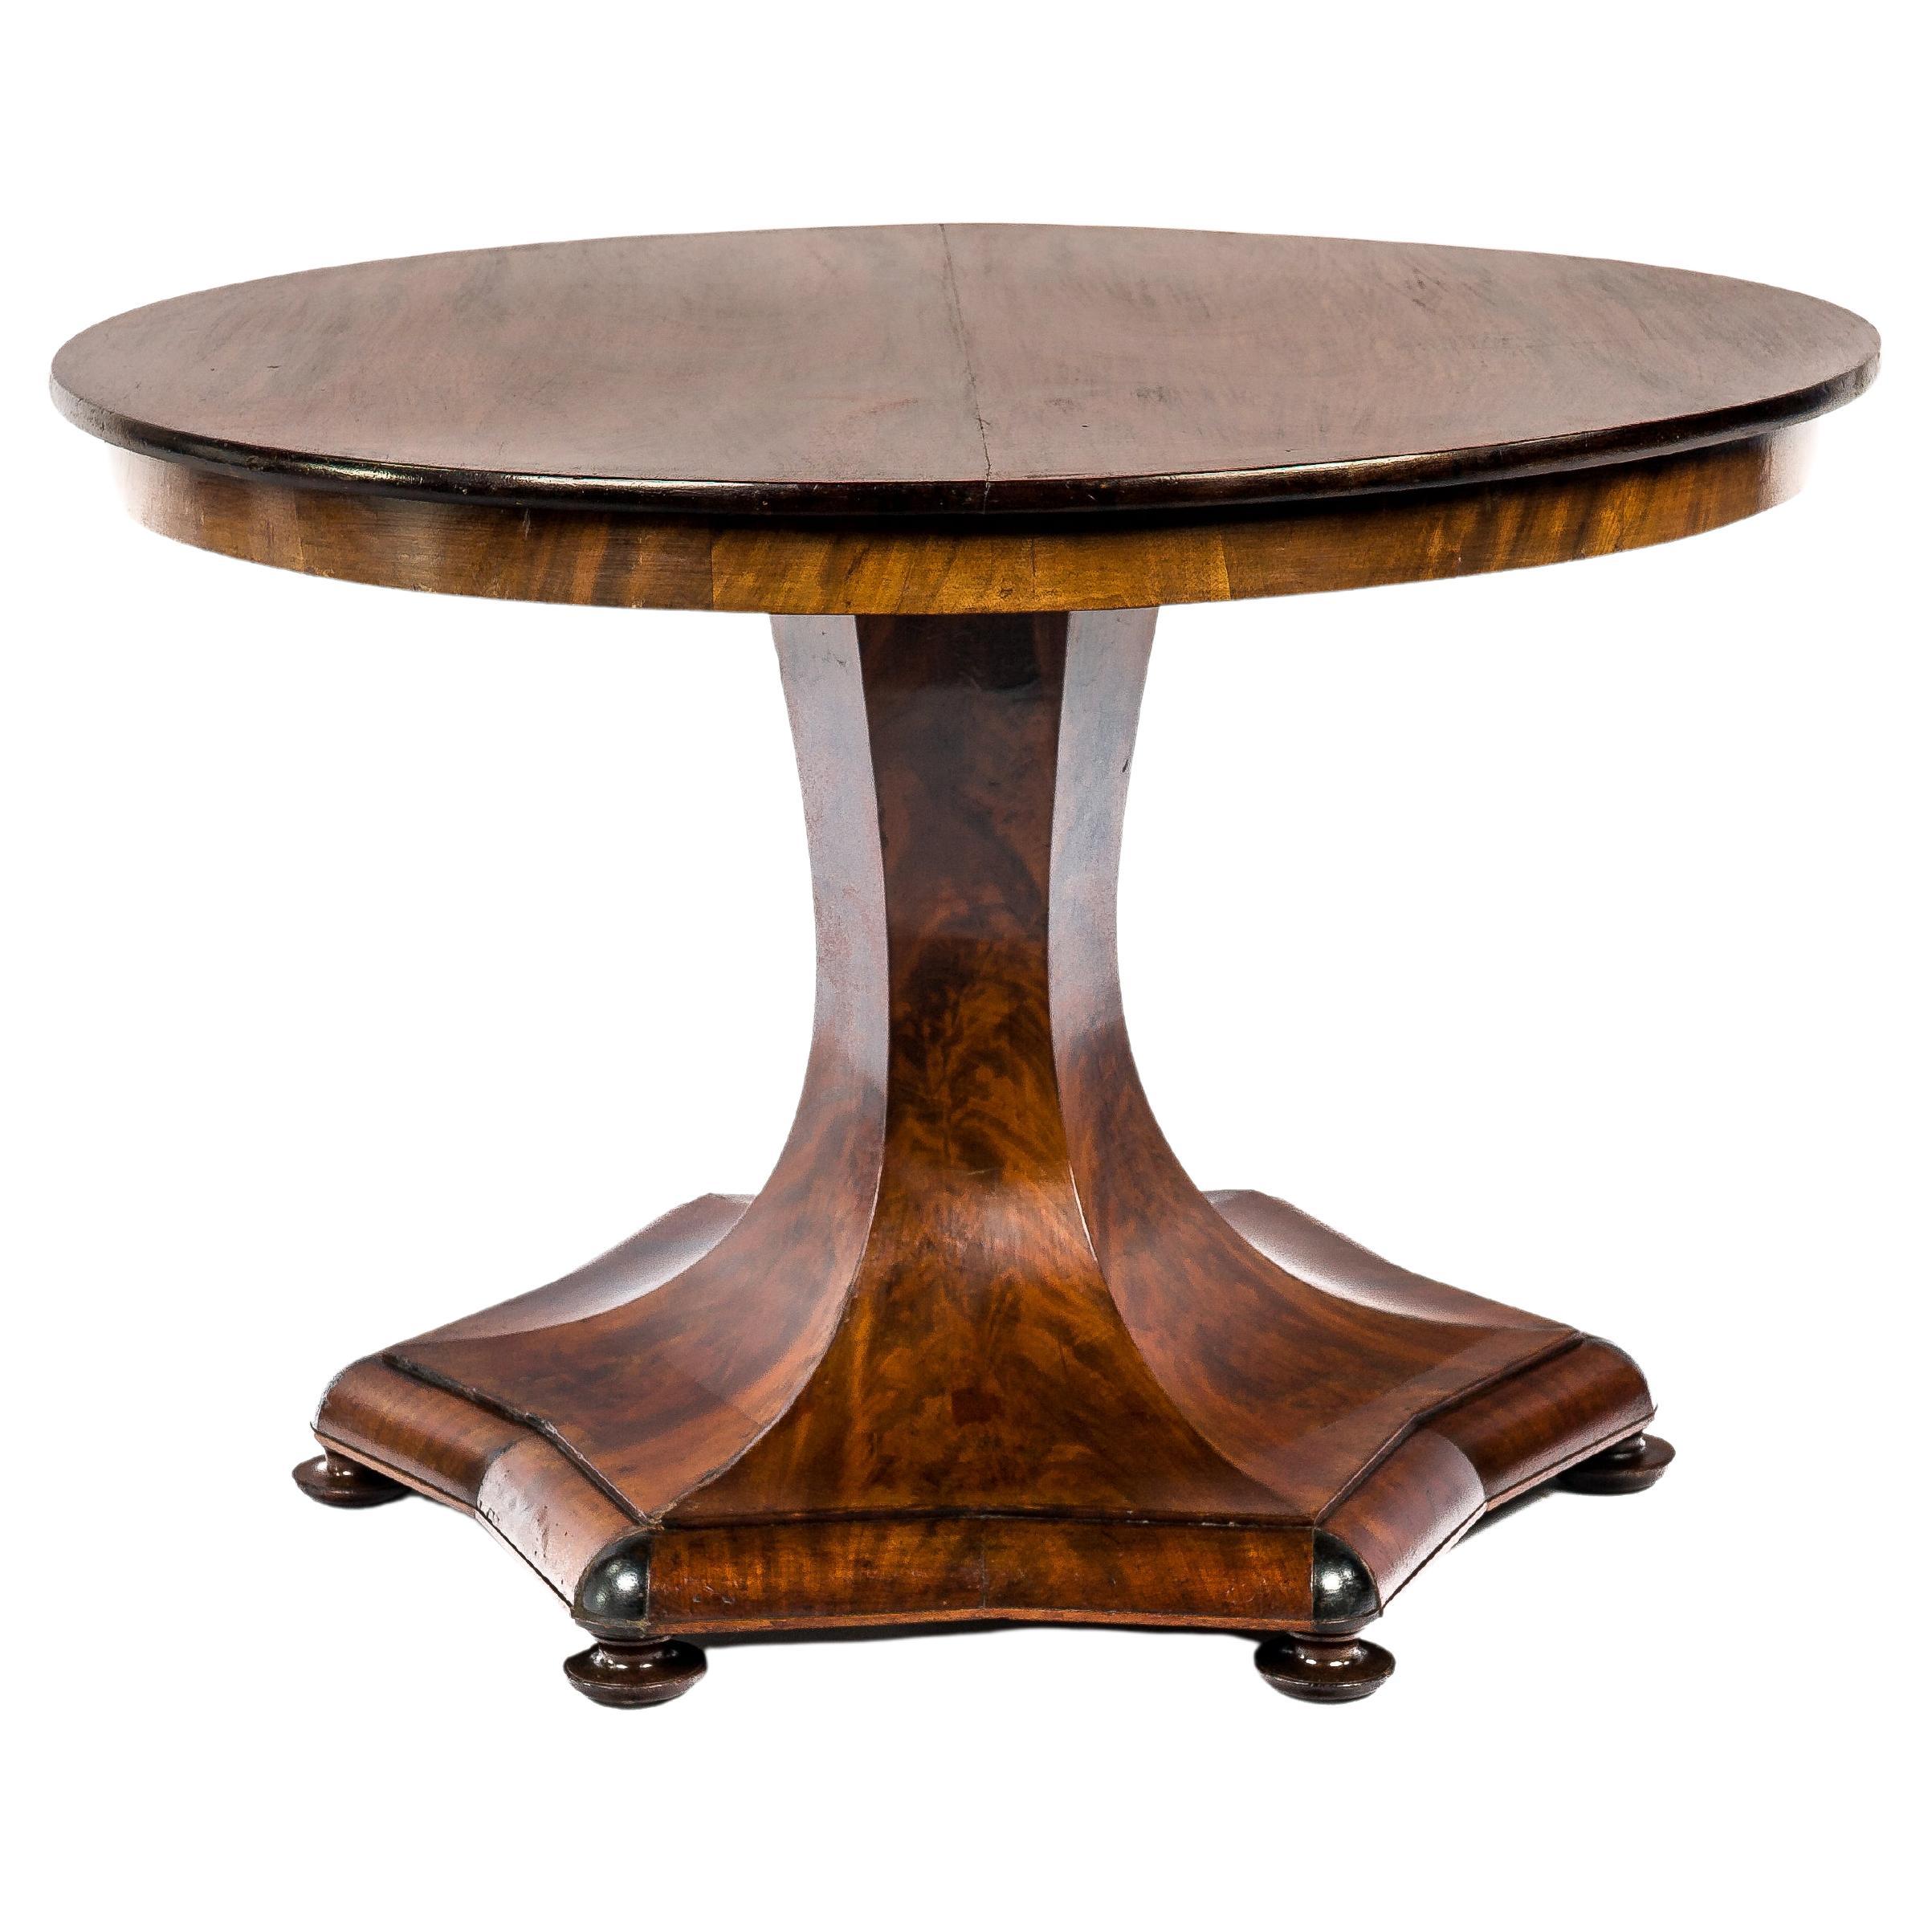 Antique 19th Century Dutch Empire Round Mahogany Table on a Hexagonal Base